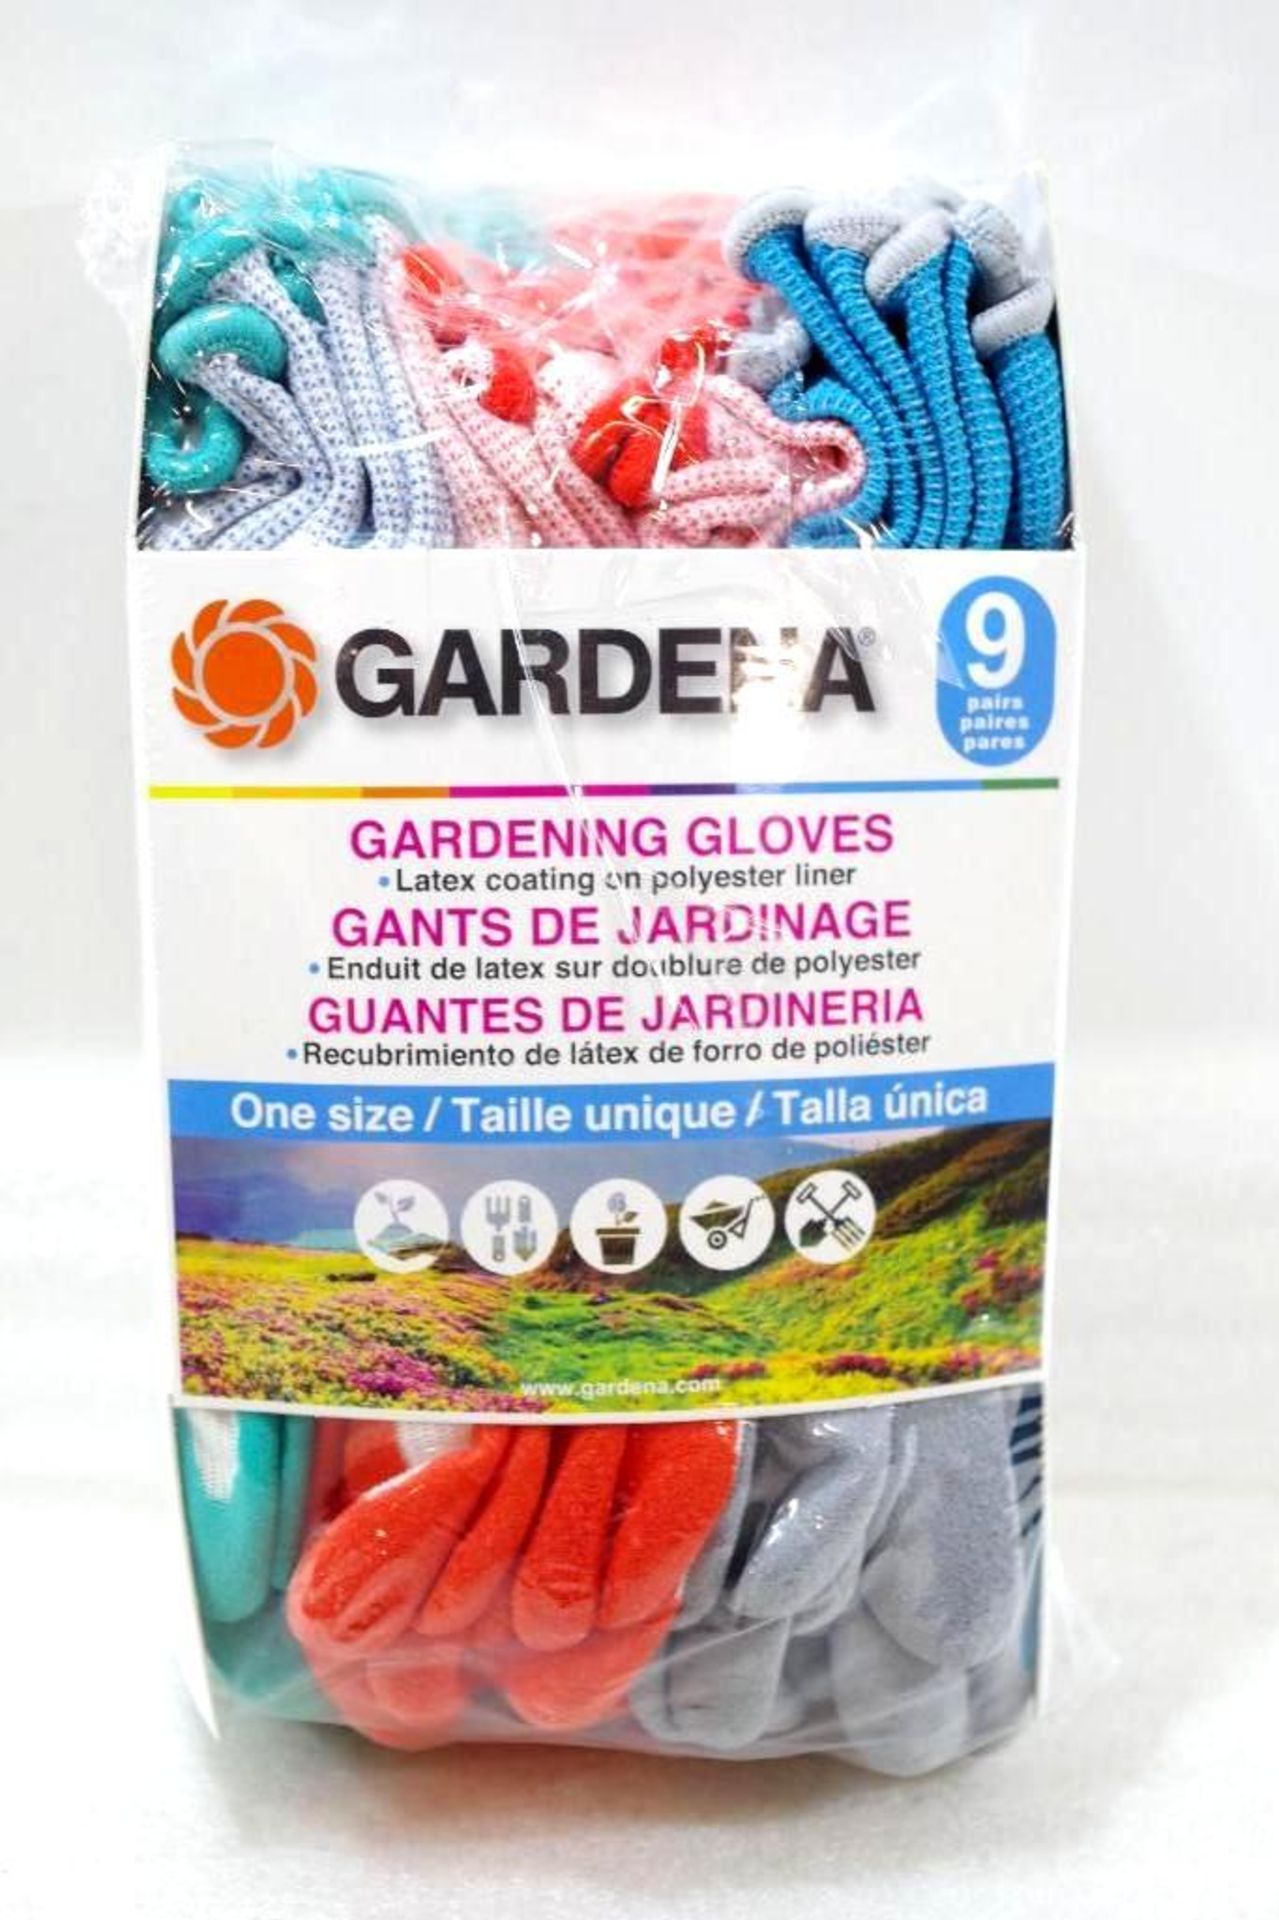 [9] NEW GARDENA Latex Coated Gardening Gloves (1 pack of 9)